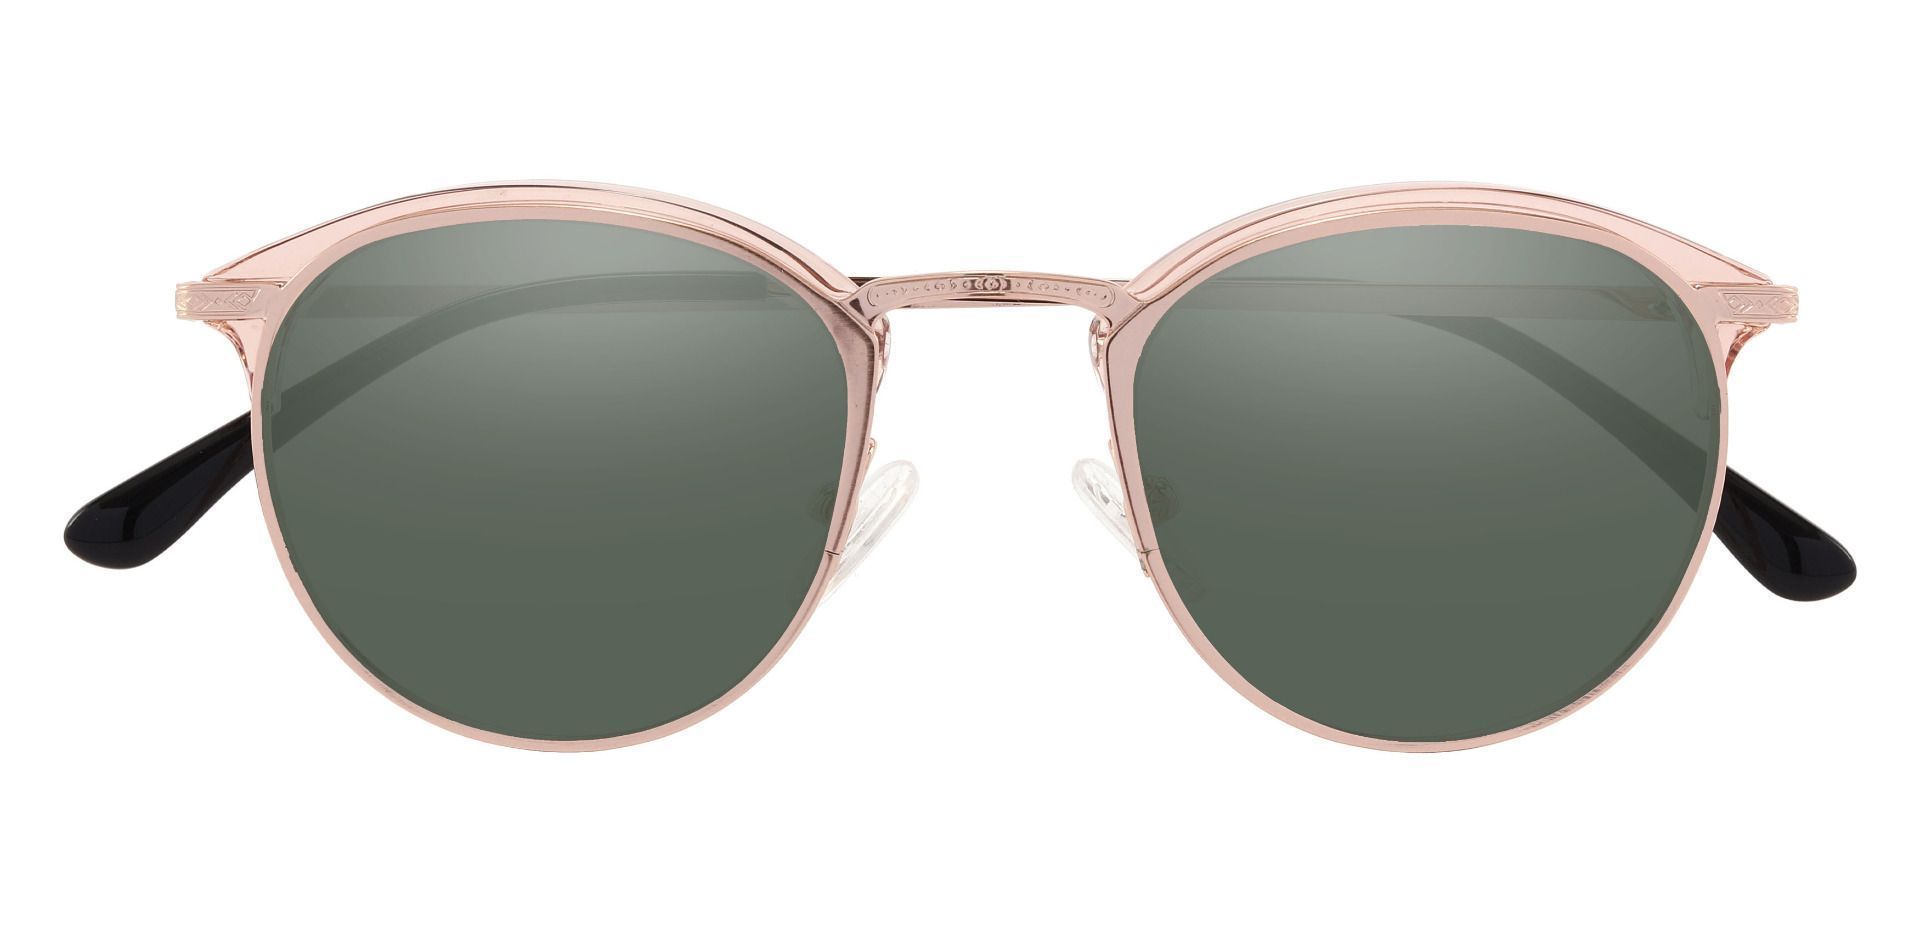 Shultz Browline Prescription Sunglasses Rose Gold Frame With Green Lenses Women S Sunglasses